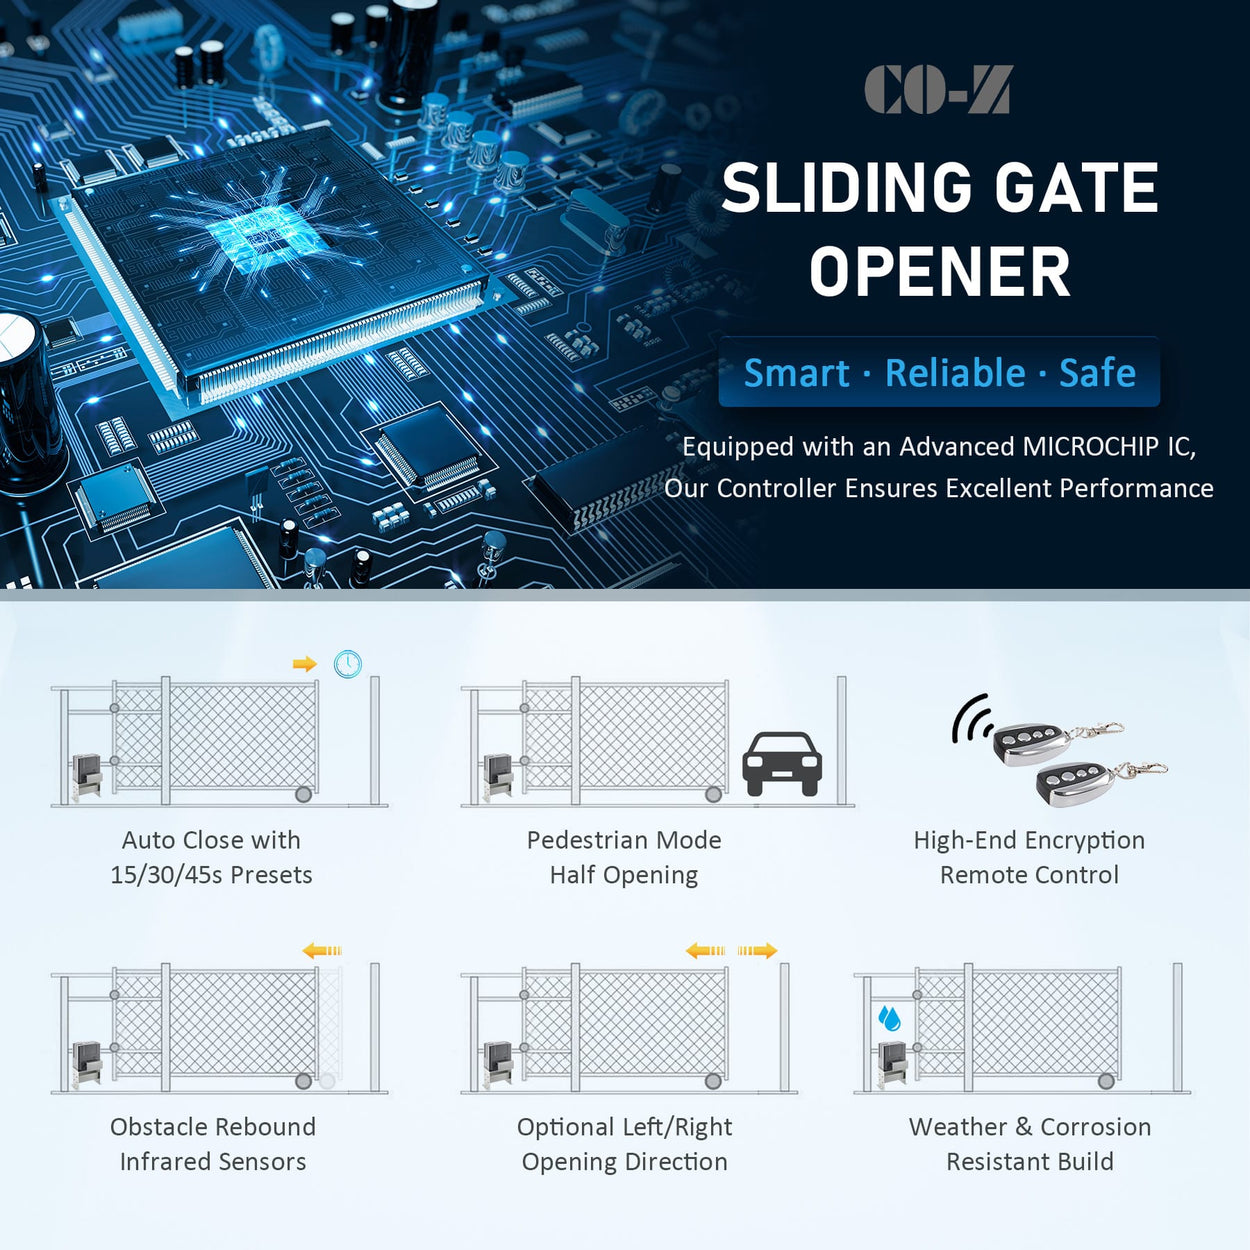    CO-Z-5500lb-Sliding-Gate-Opener-with-Hardware-Parts